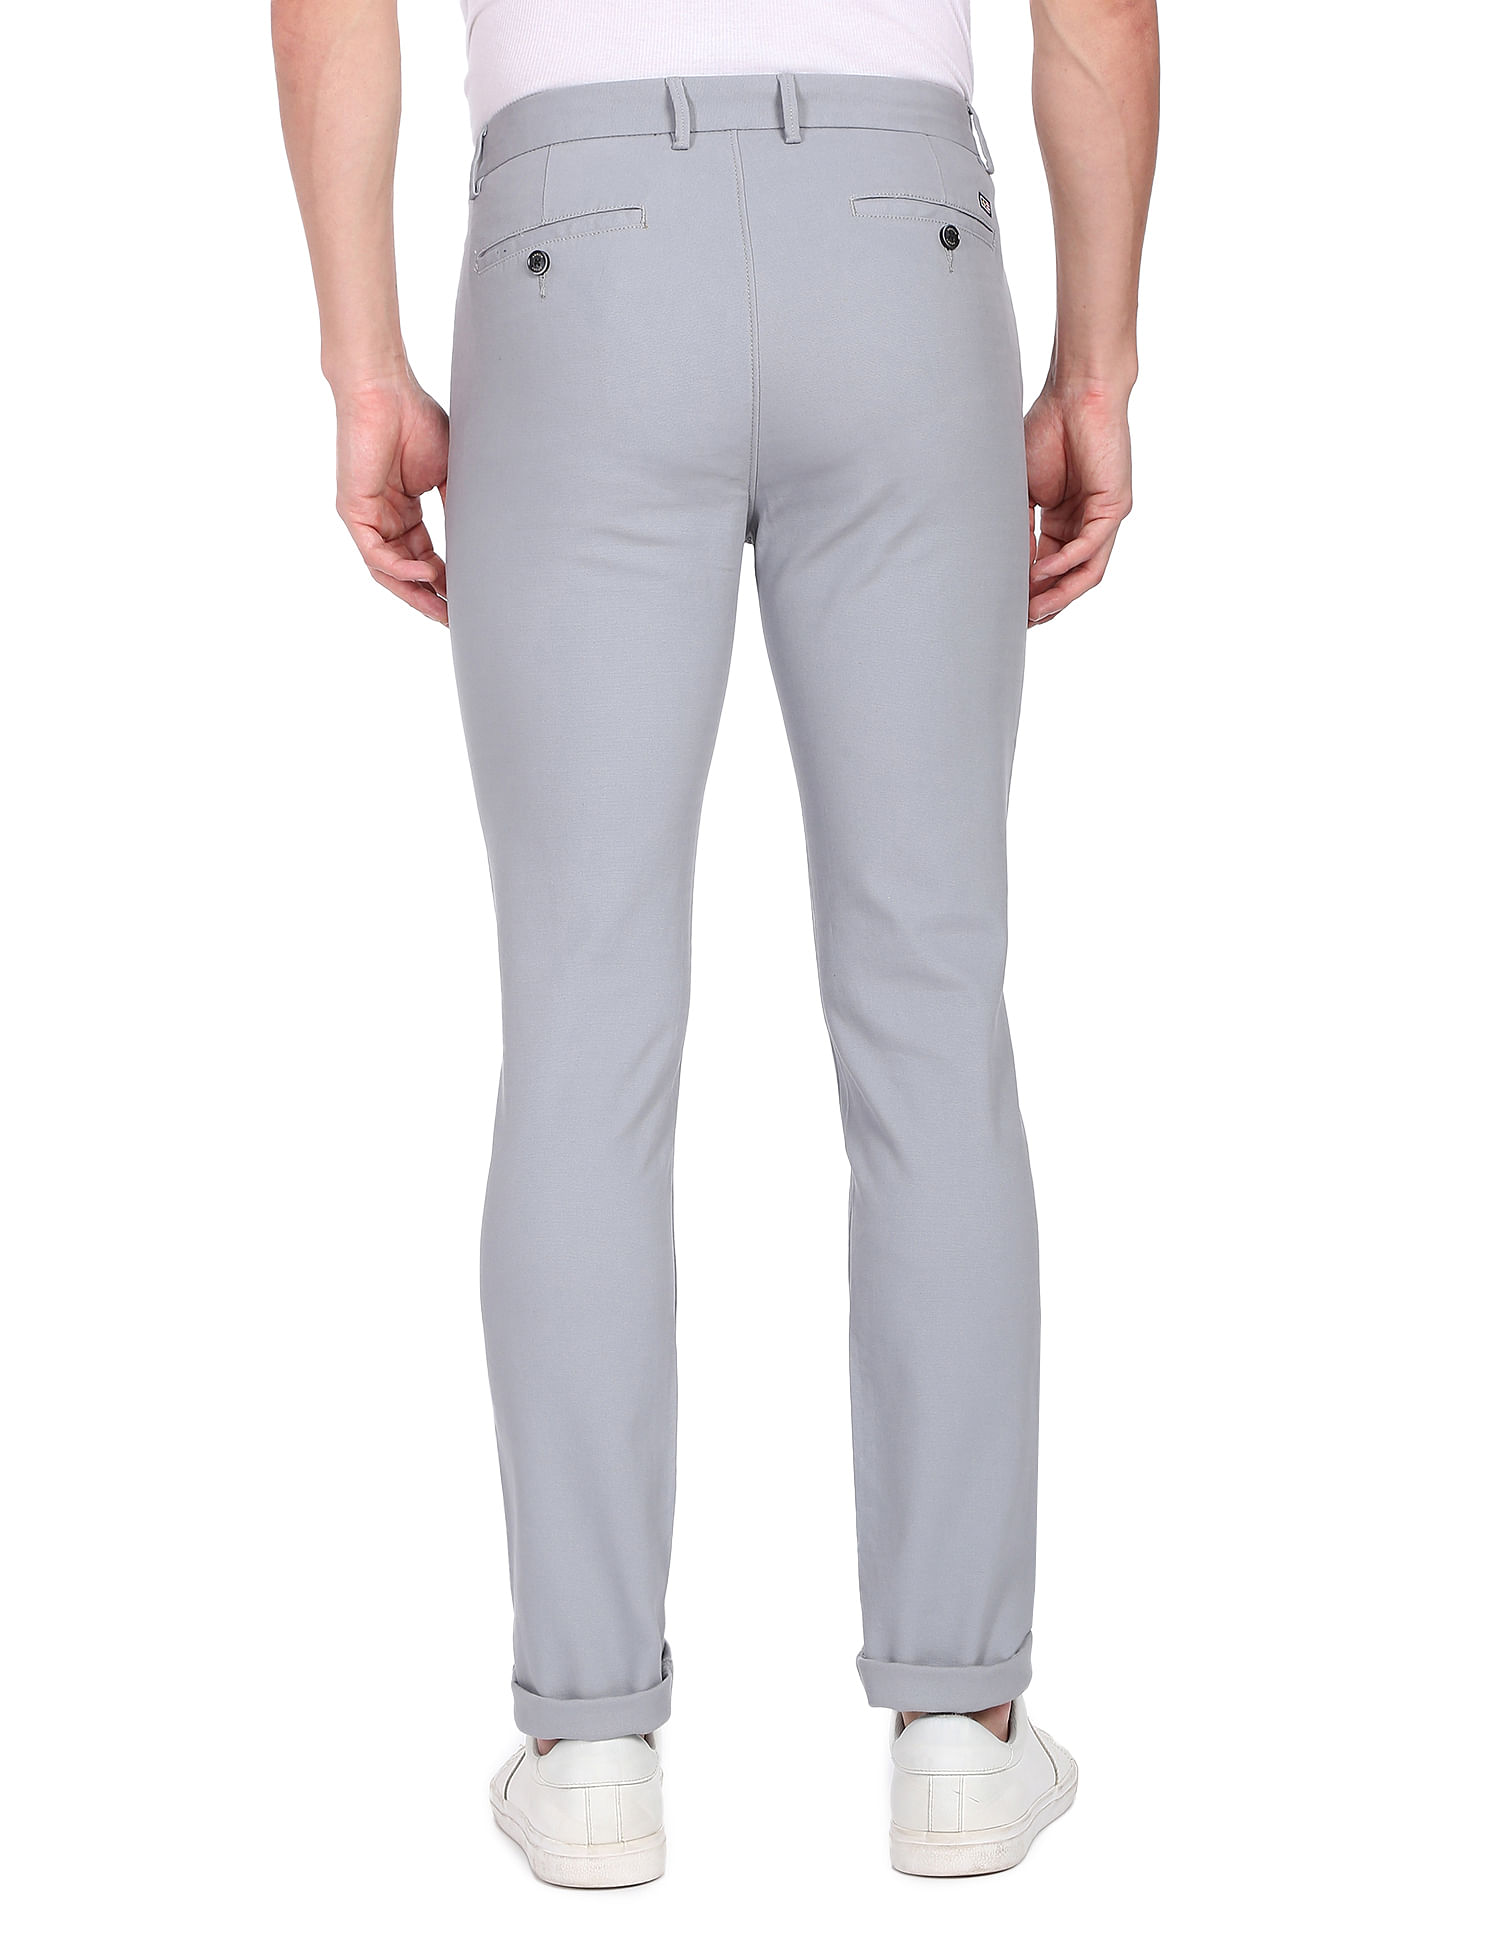 Light Grey Self Design Trousers - Selling Fast at Pantaloons.com